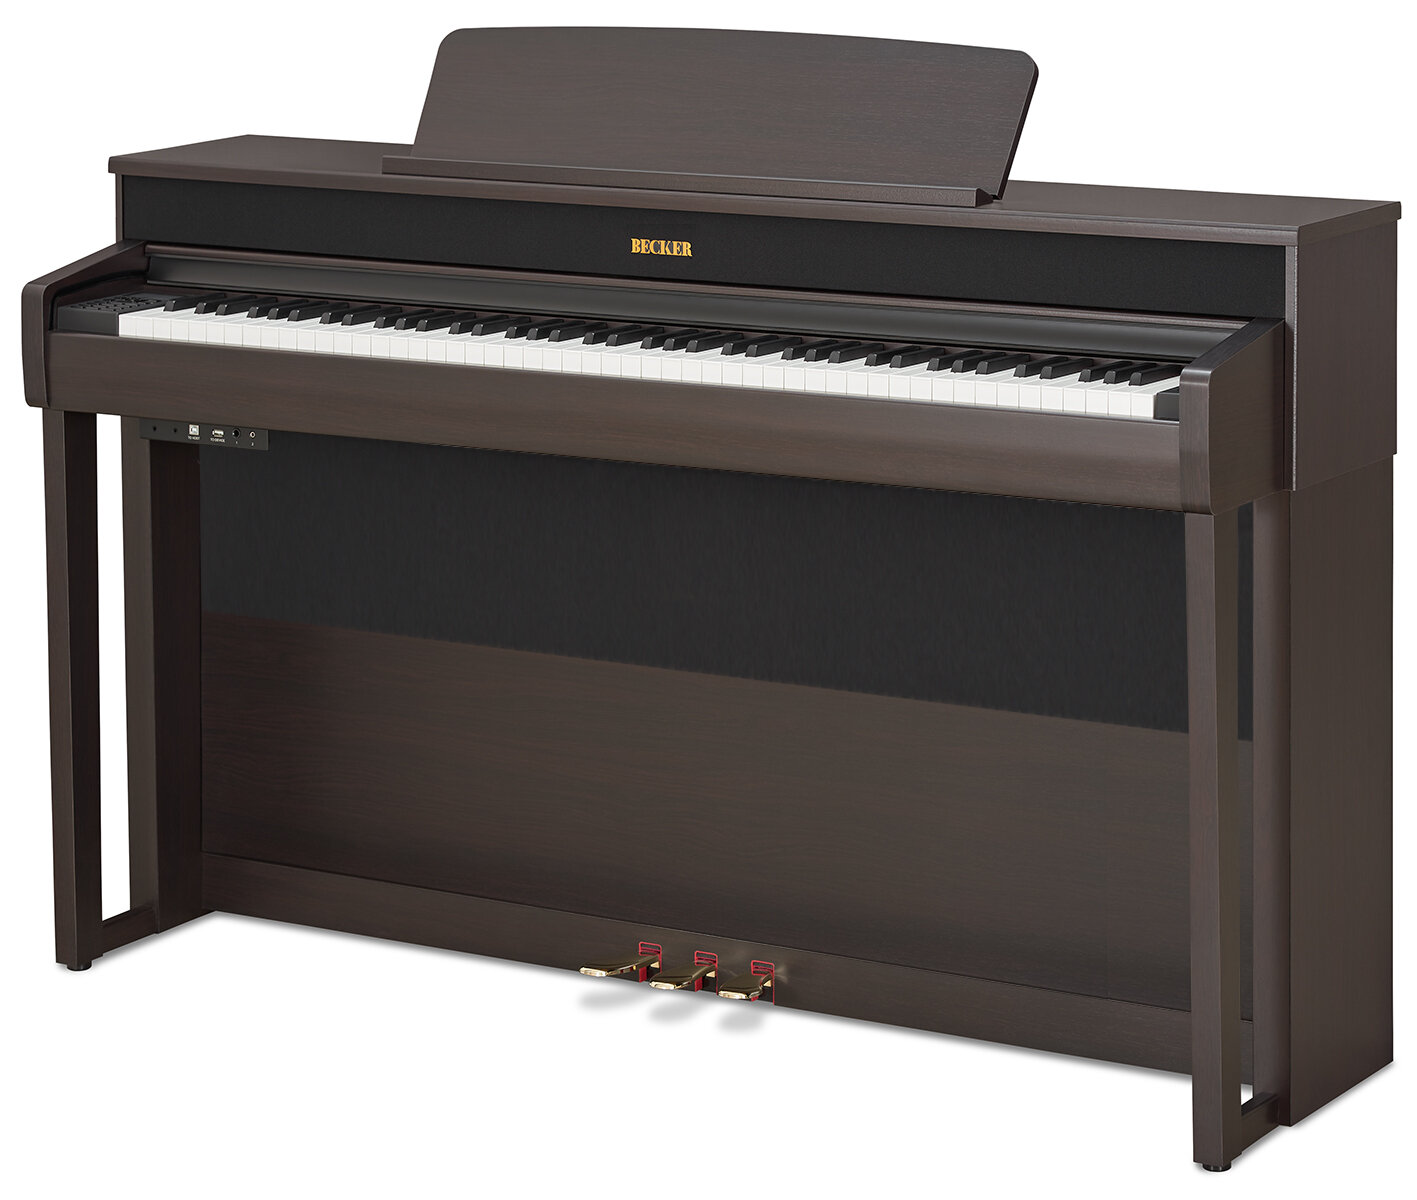 "Becker BAP-72R цифровое пианино, цвет палисандр, механика New RHA-3W, деревянные клавиши"